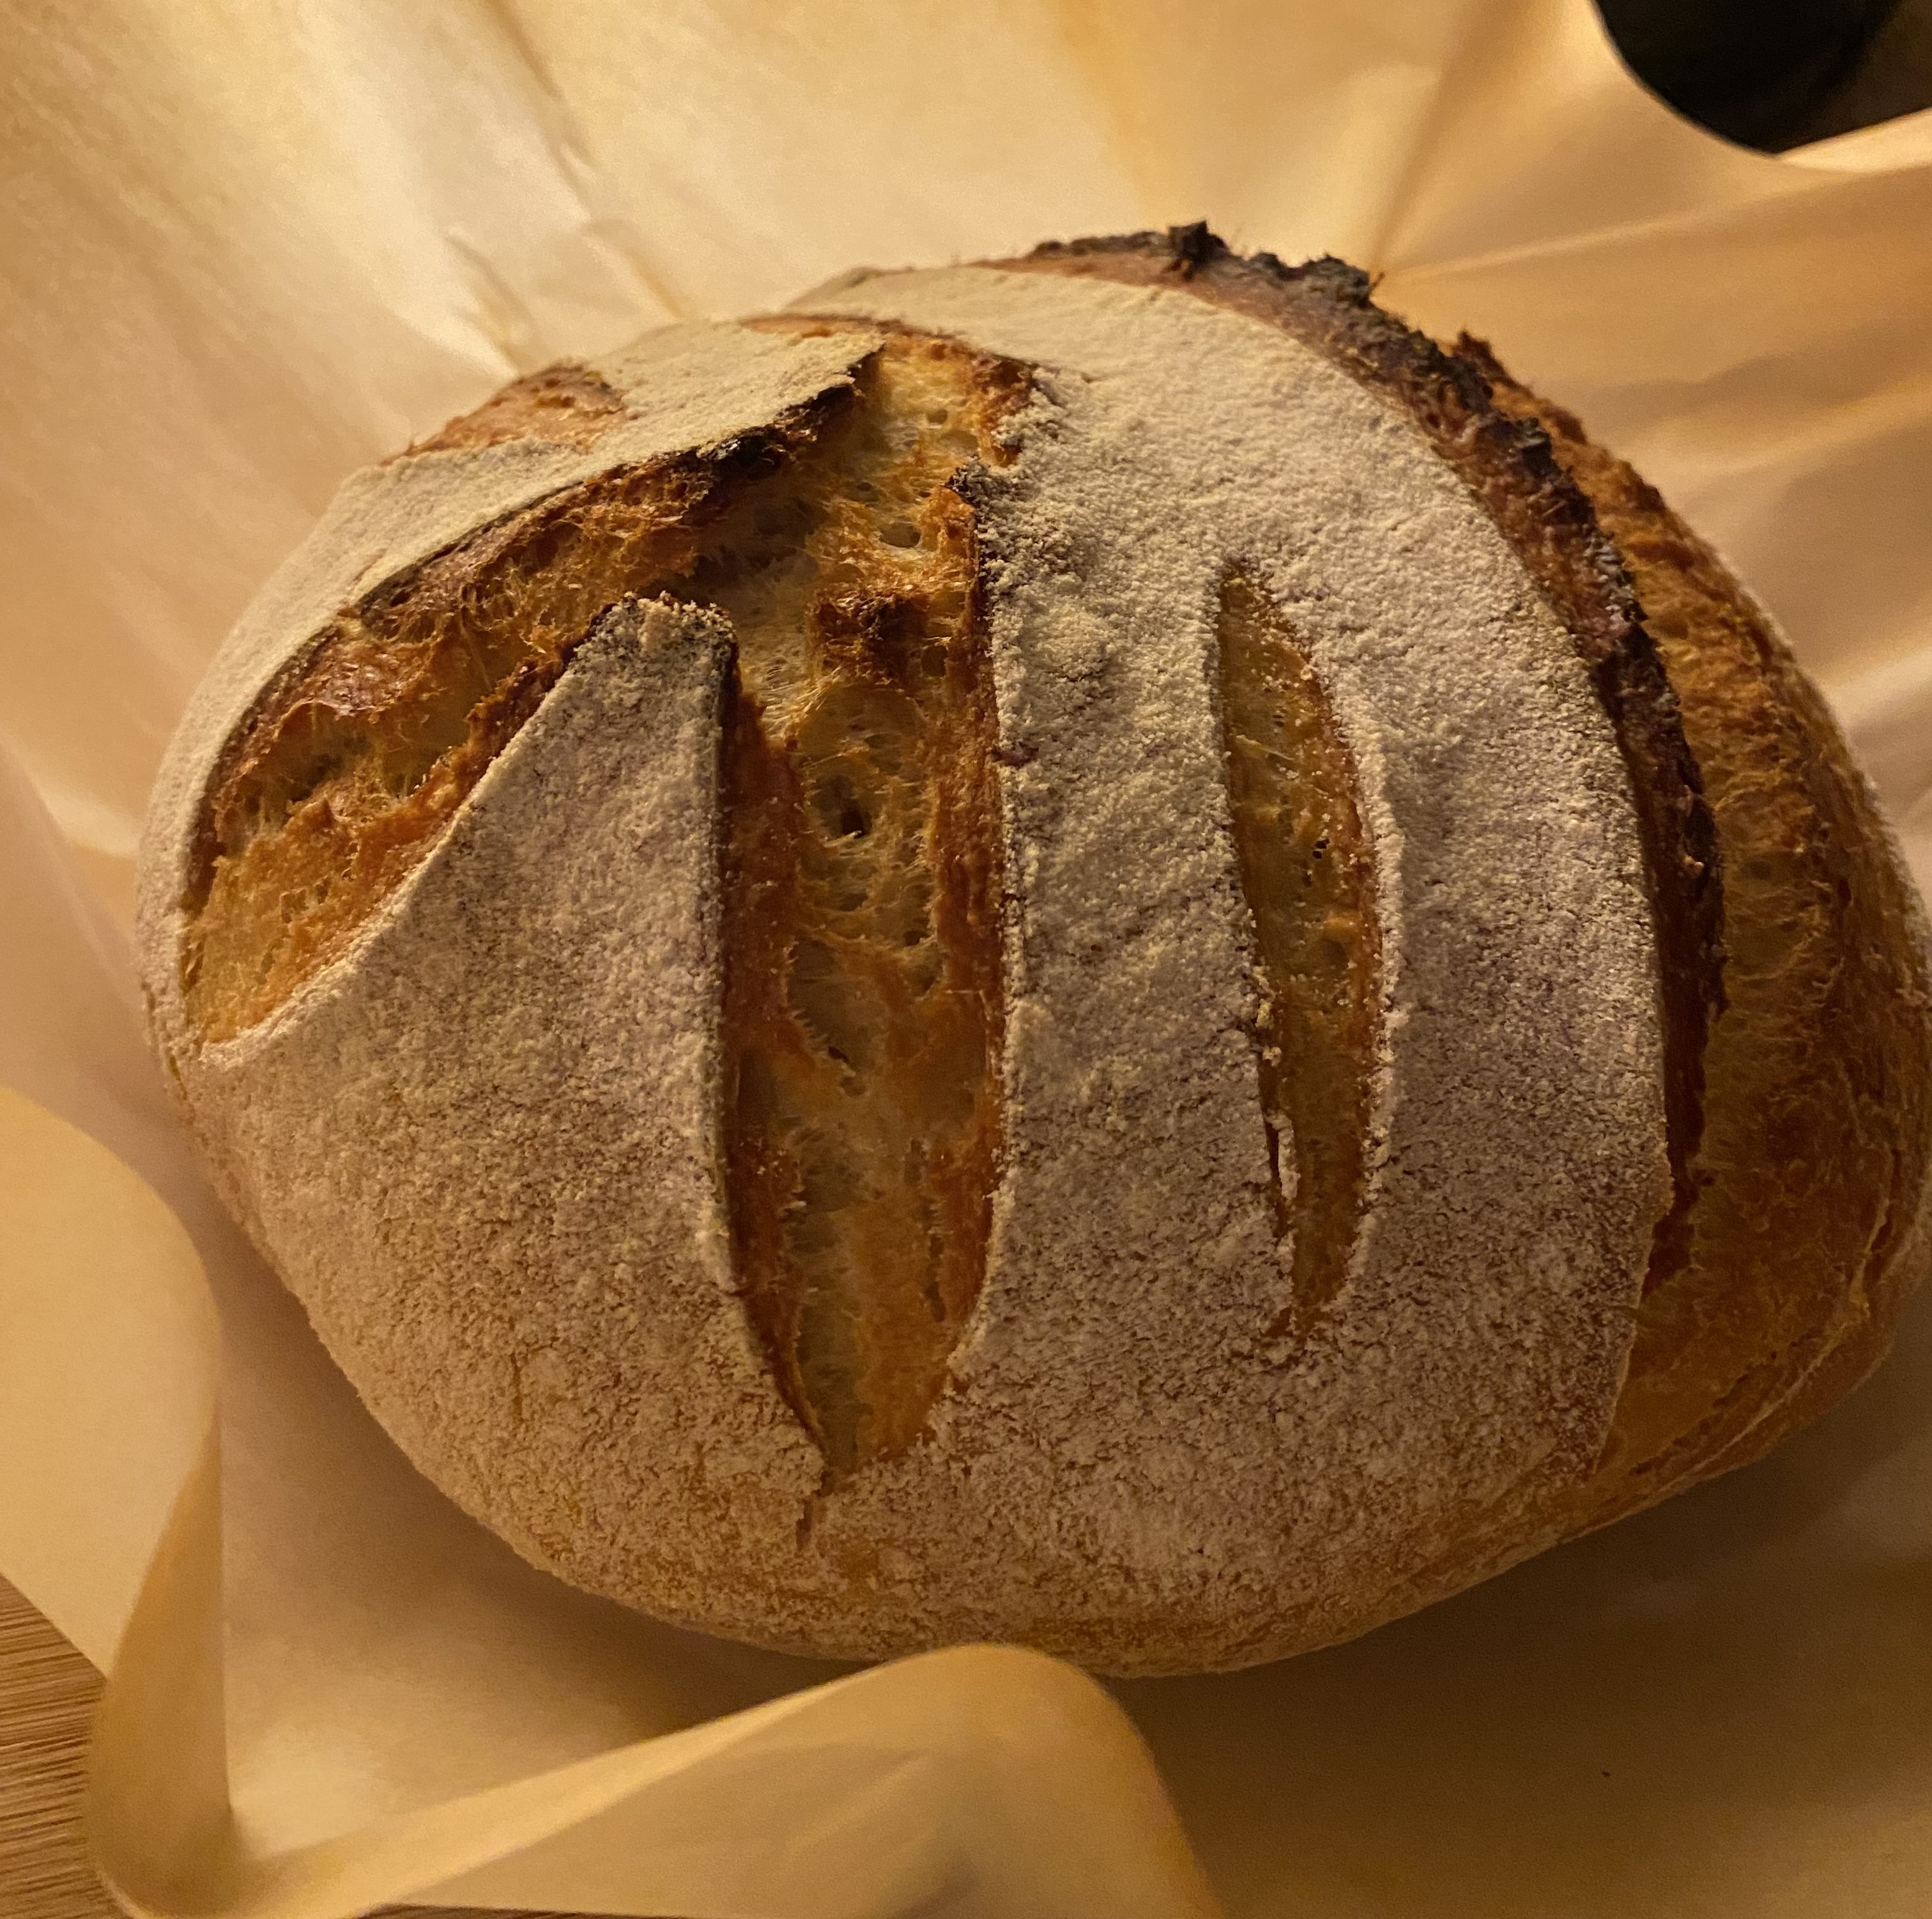 The Baker’s Bread